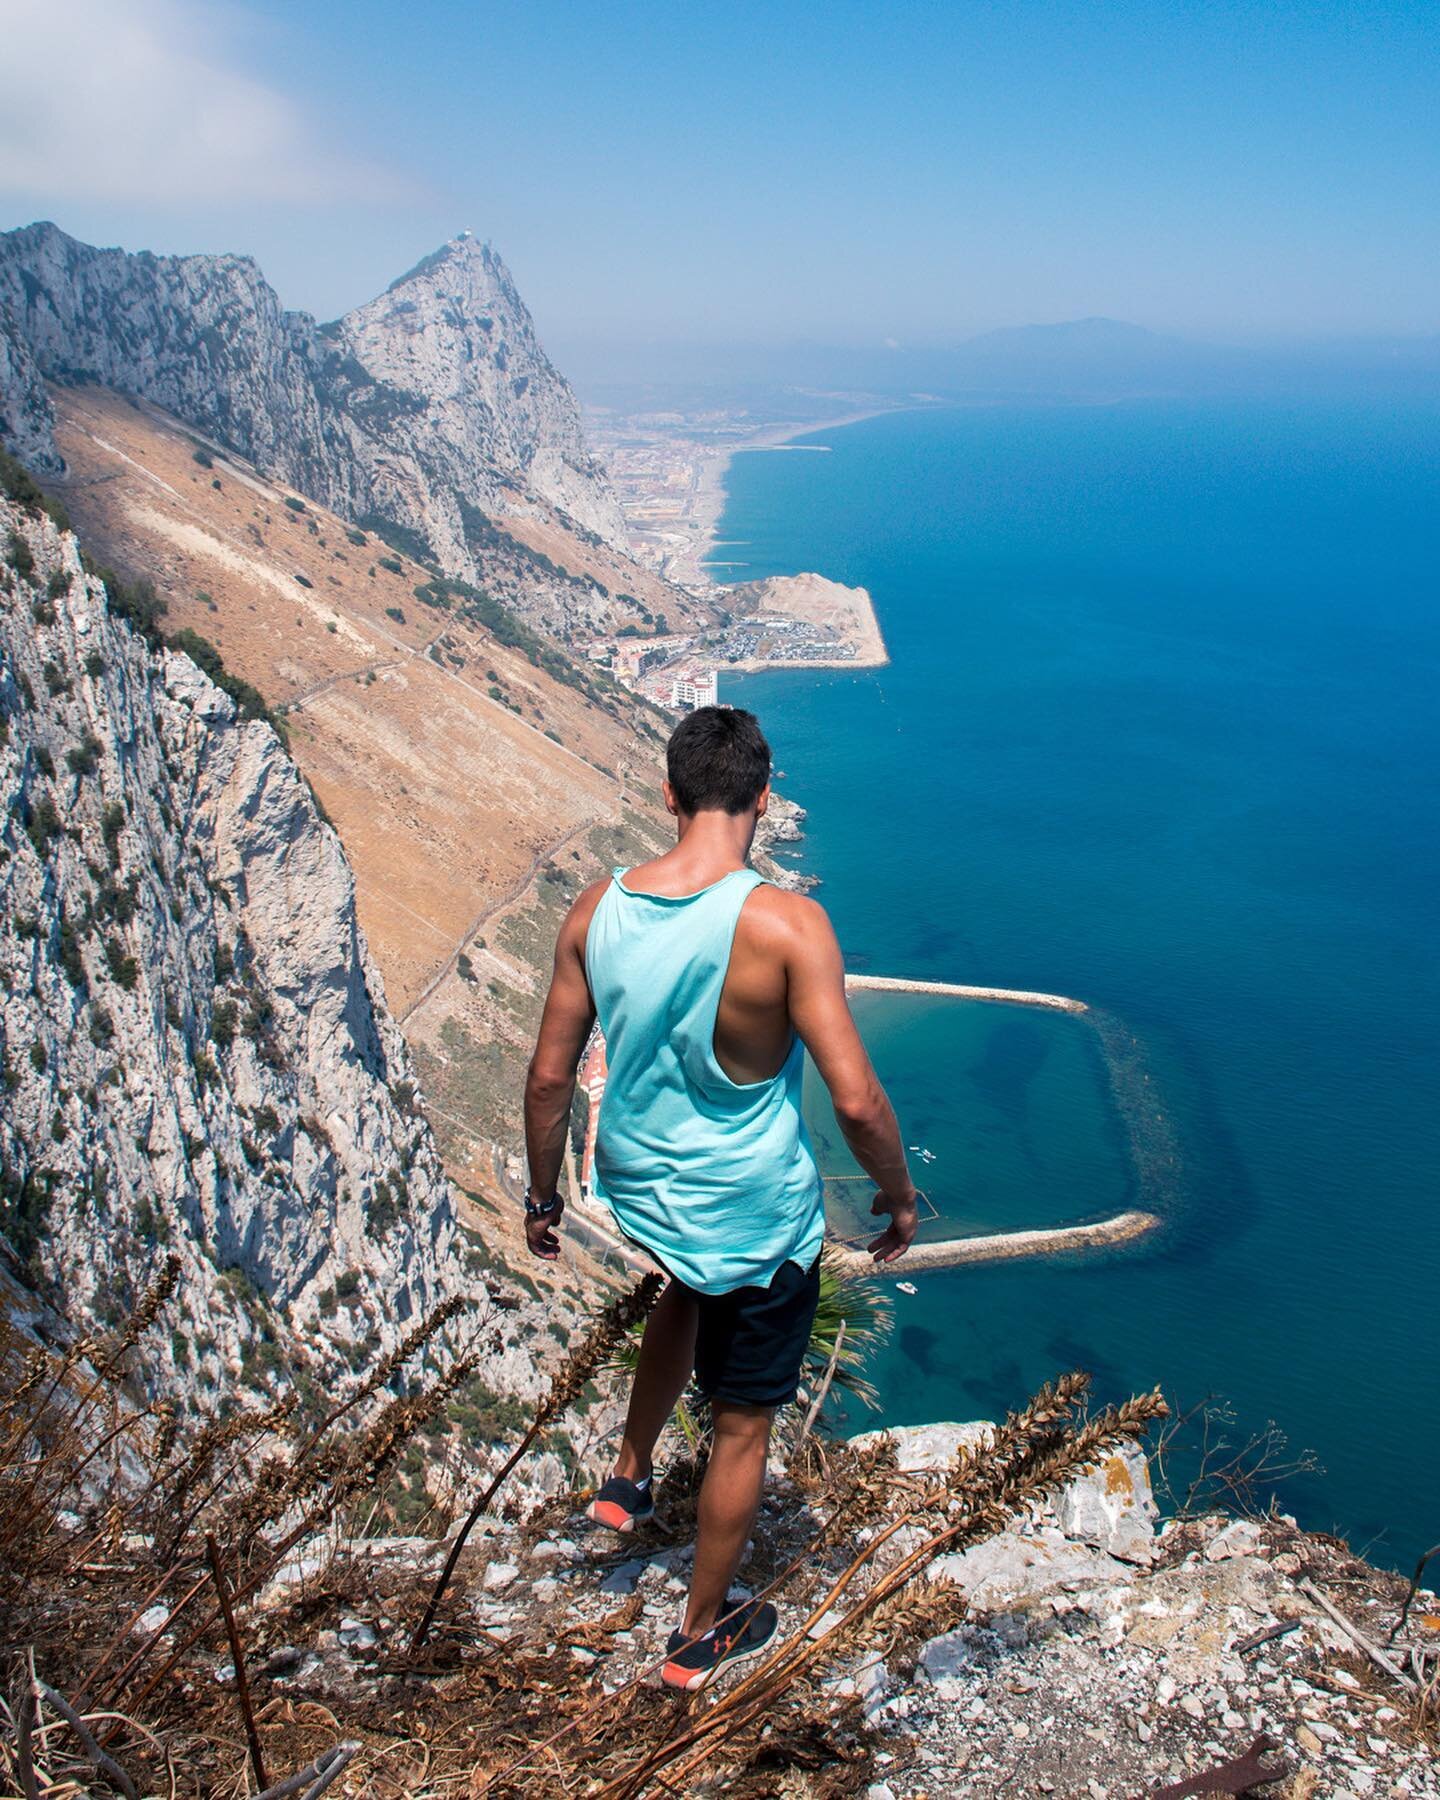 The place to be in #Gibraltar. #MediterraneanSteps
.
.
.
.
.
.
.
.
.
.
#viveandalucia #Andalucia #estaes_andalucia #Gibraltar #ig_spain #TopSpainPhoto #andalucia #allaboutadventure #viajar #lovespain #Gibilterra #RockGibraltar #travelblogger #lifeofa